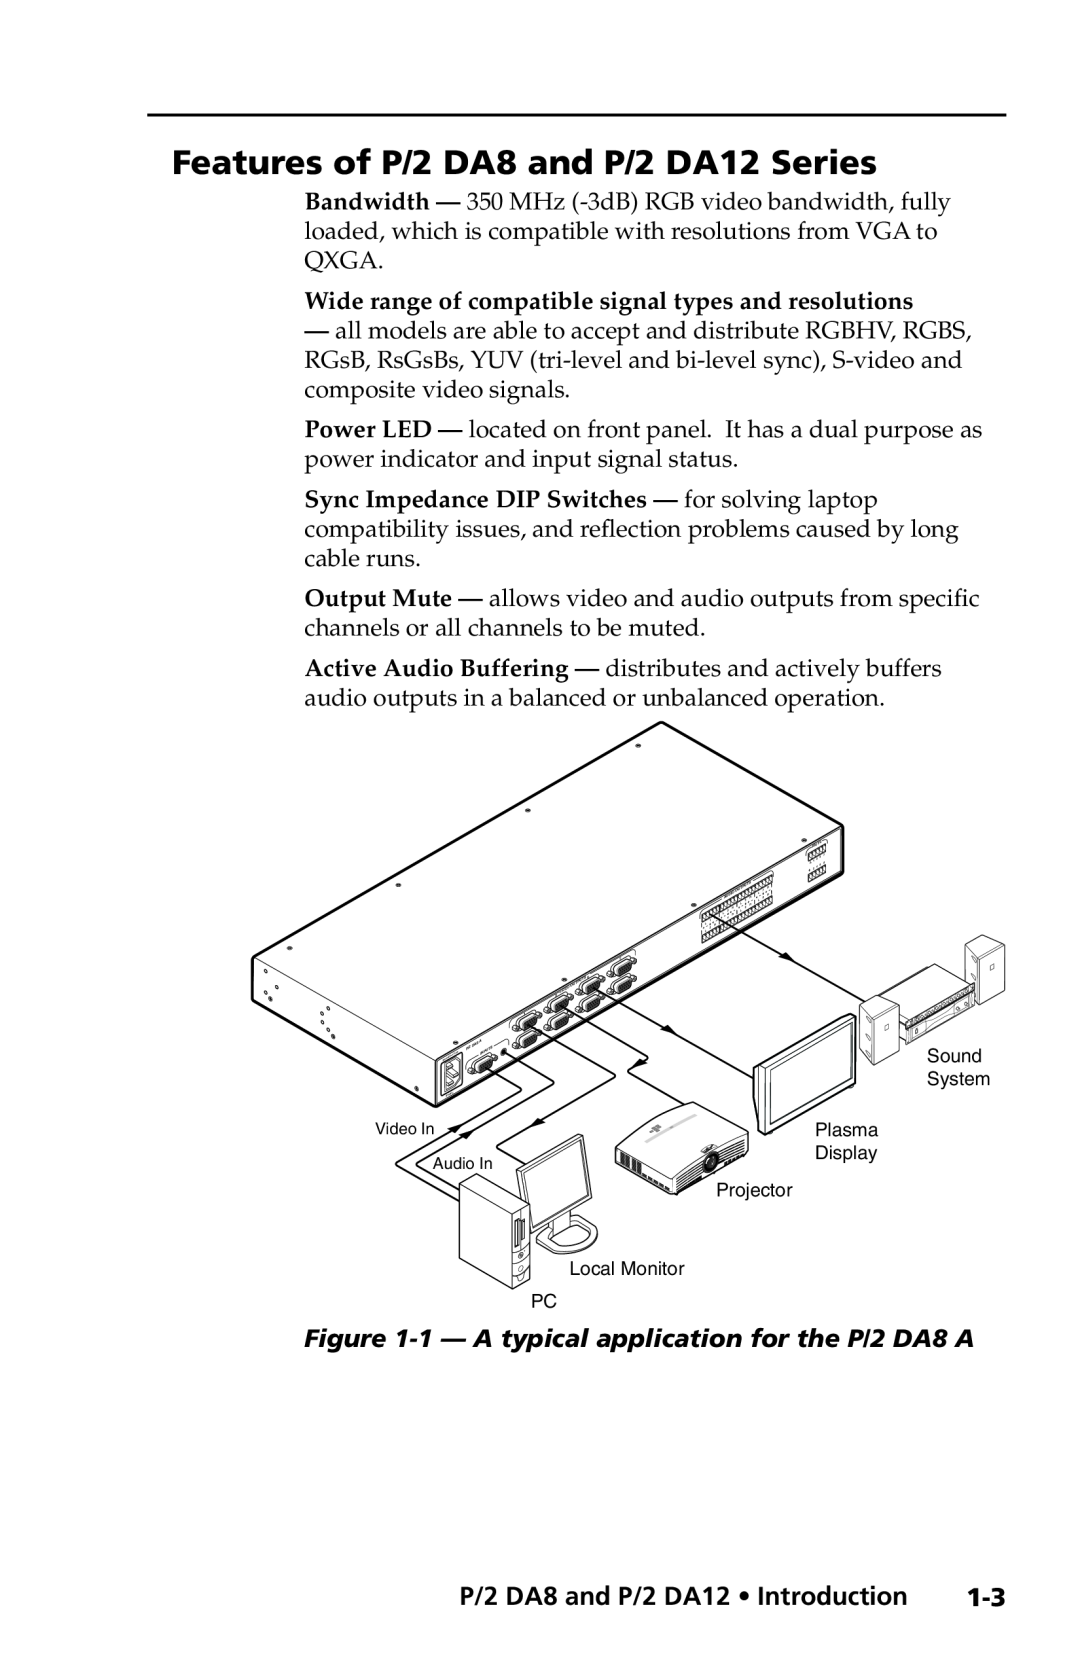 Extron electronic user manual Features of P/2 DA8 and P/2 DA12 Series, P/2 DA8 and P/2 DA12 Introduction 